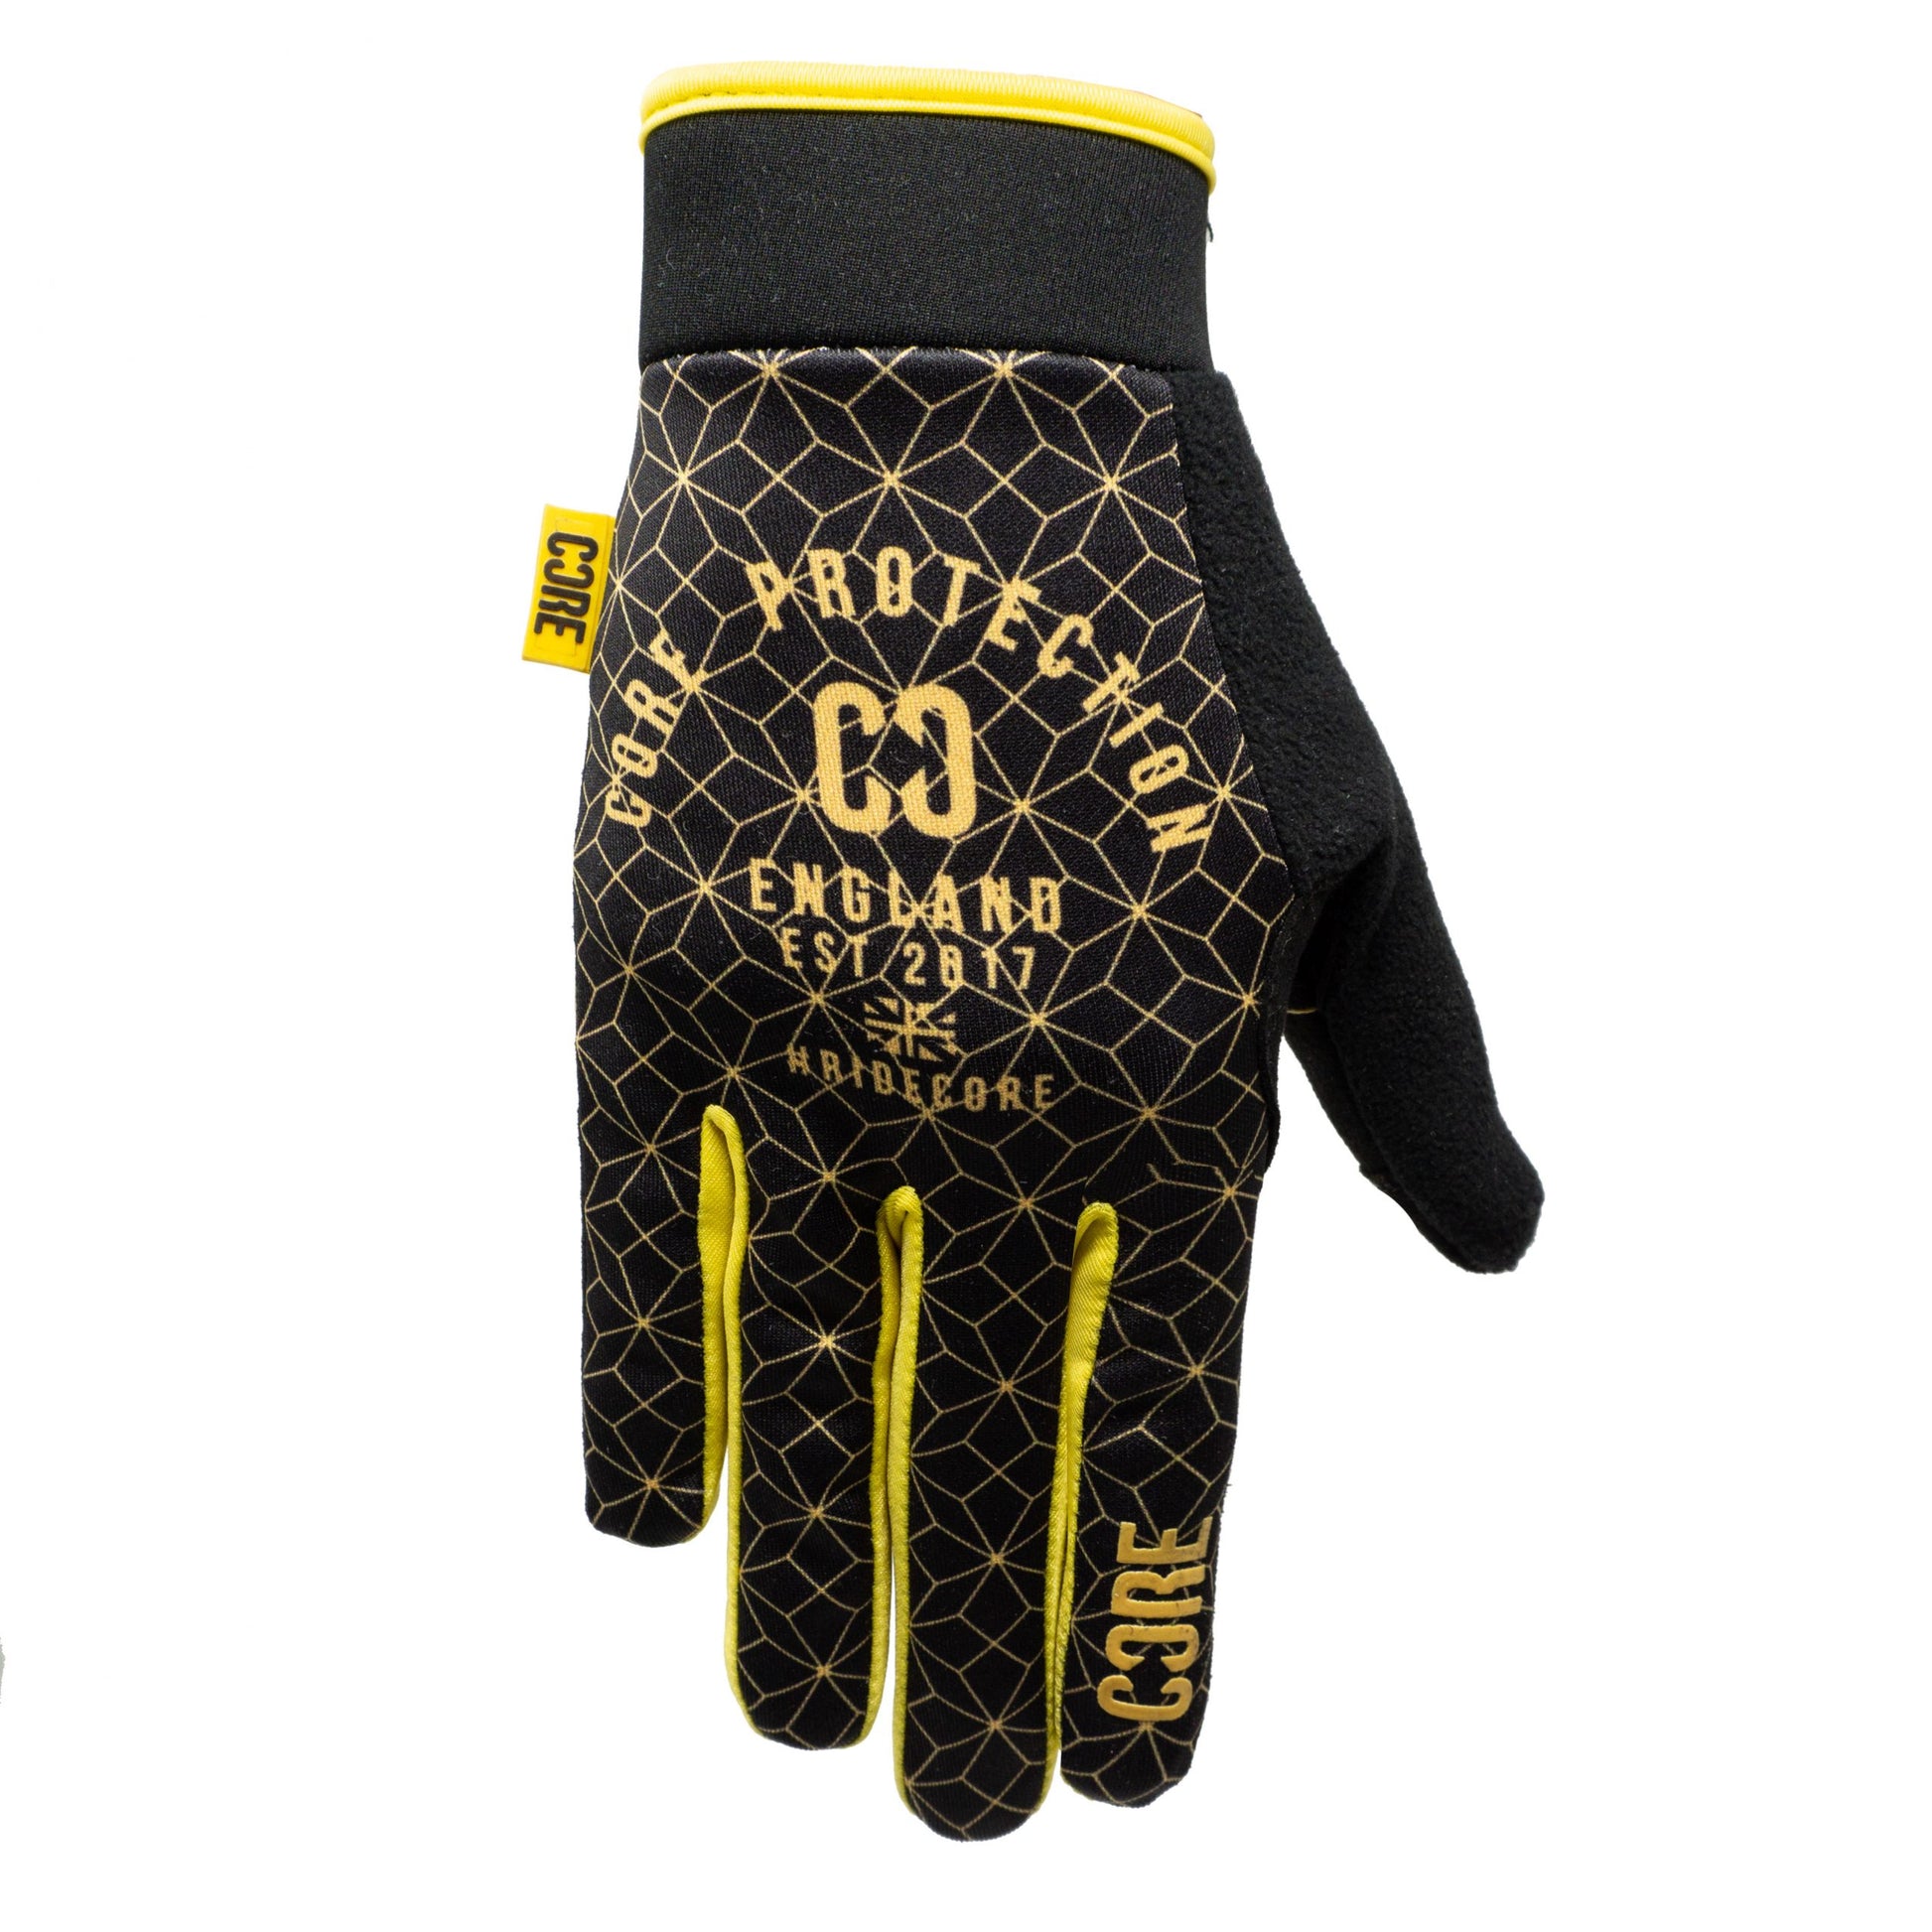 CORE Protection Gloves SR – Black / Gold Geo - Prime Delux Store